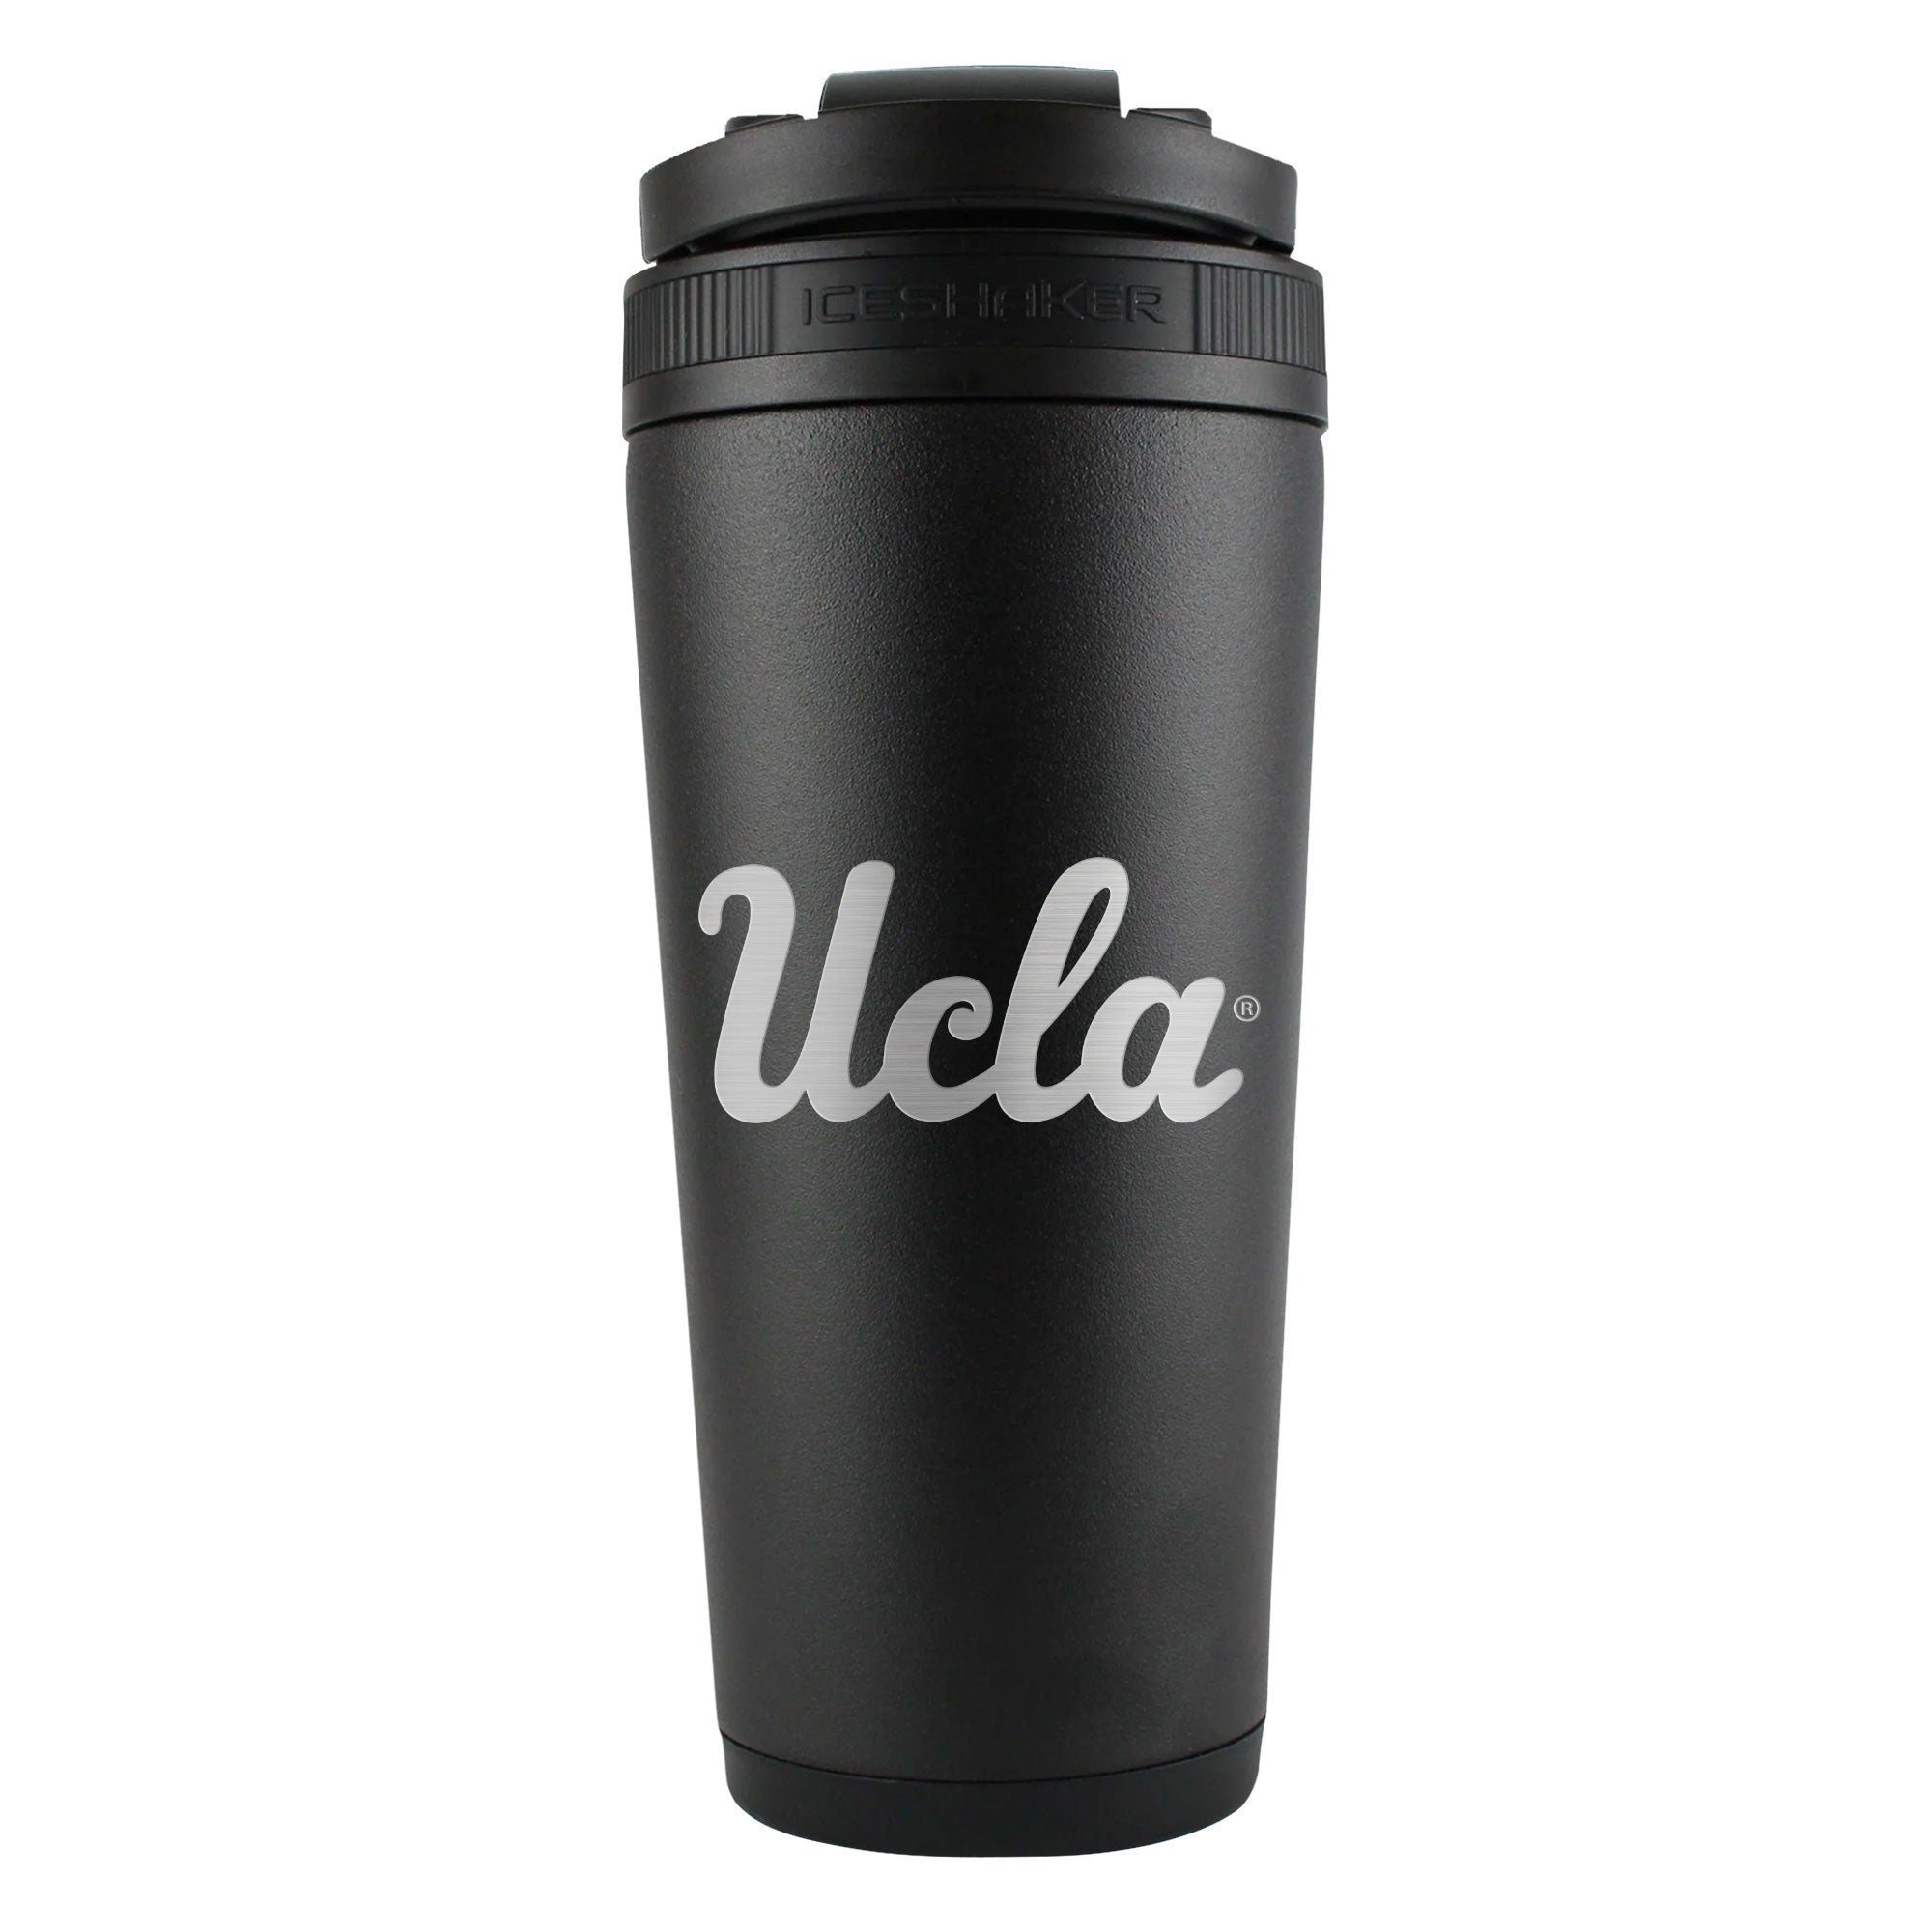 Officially Licensed UCLA 26oz Ice Shaker - Black